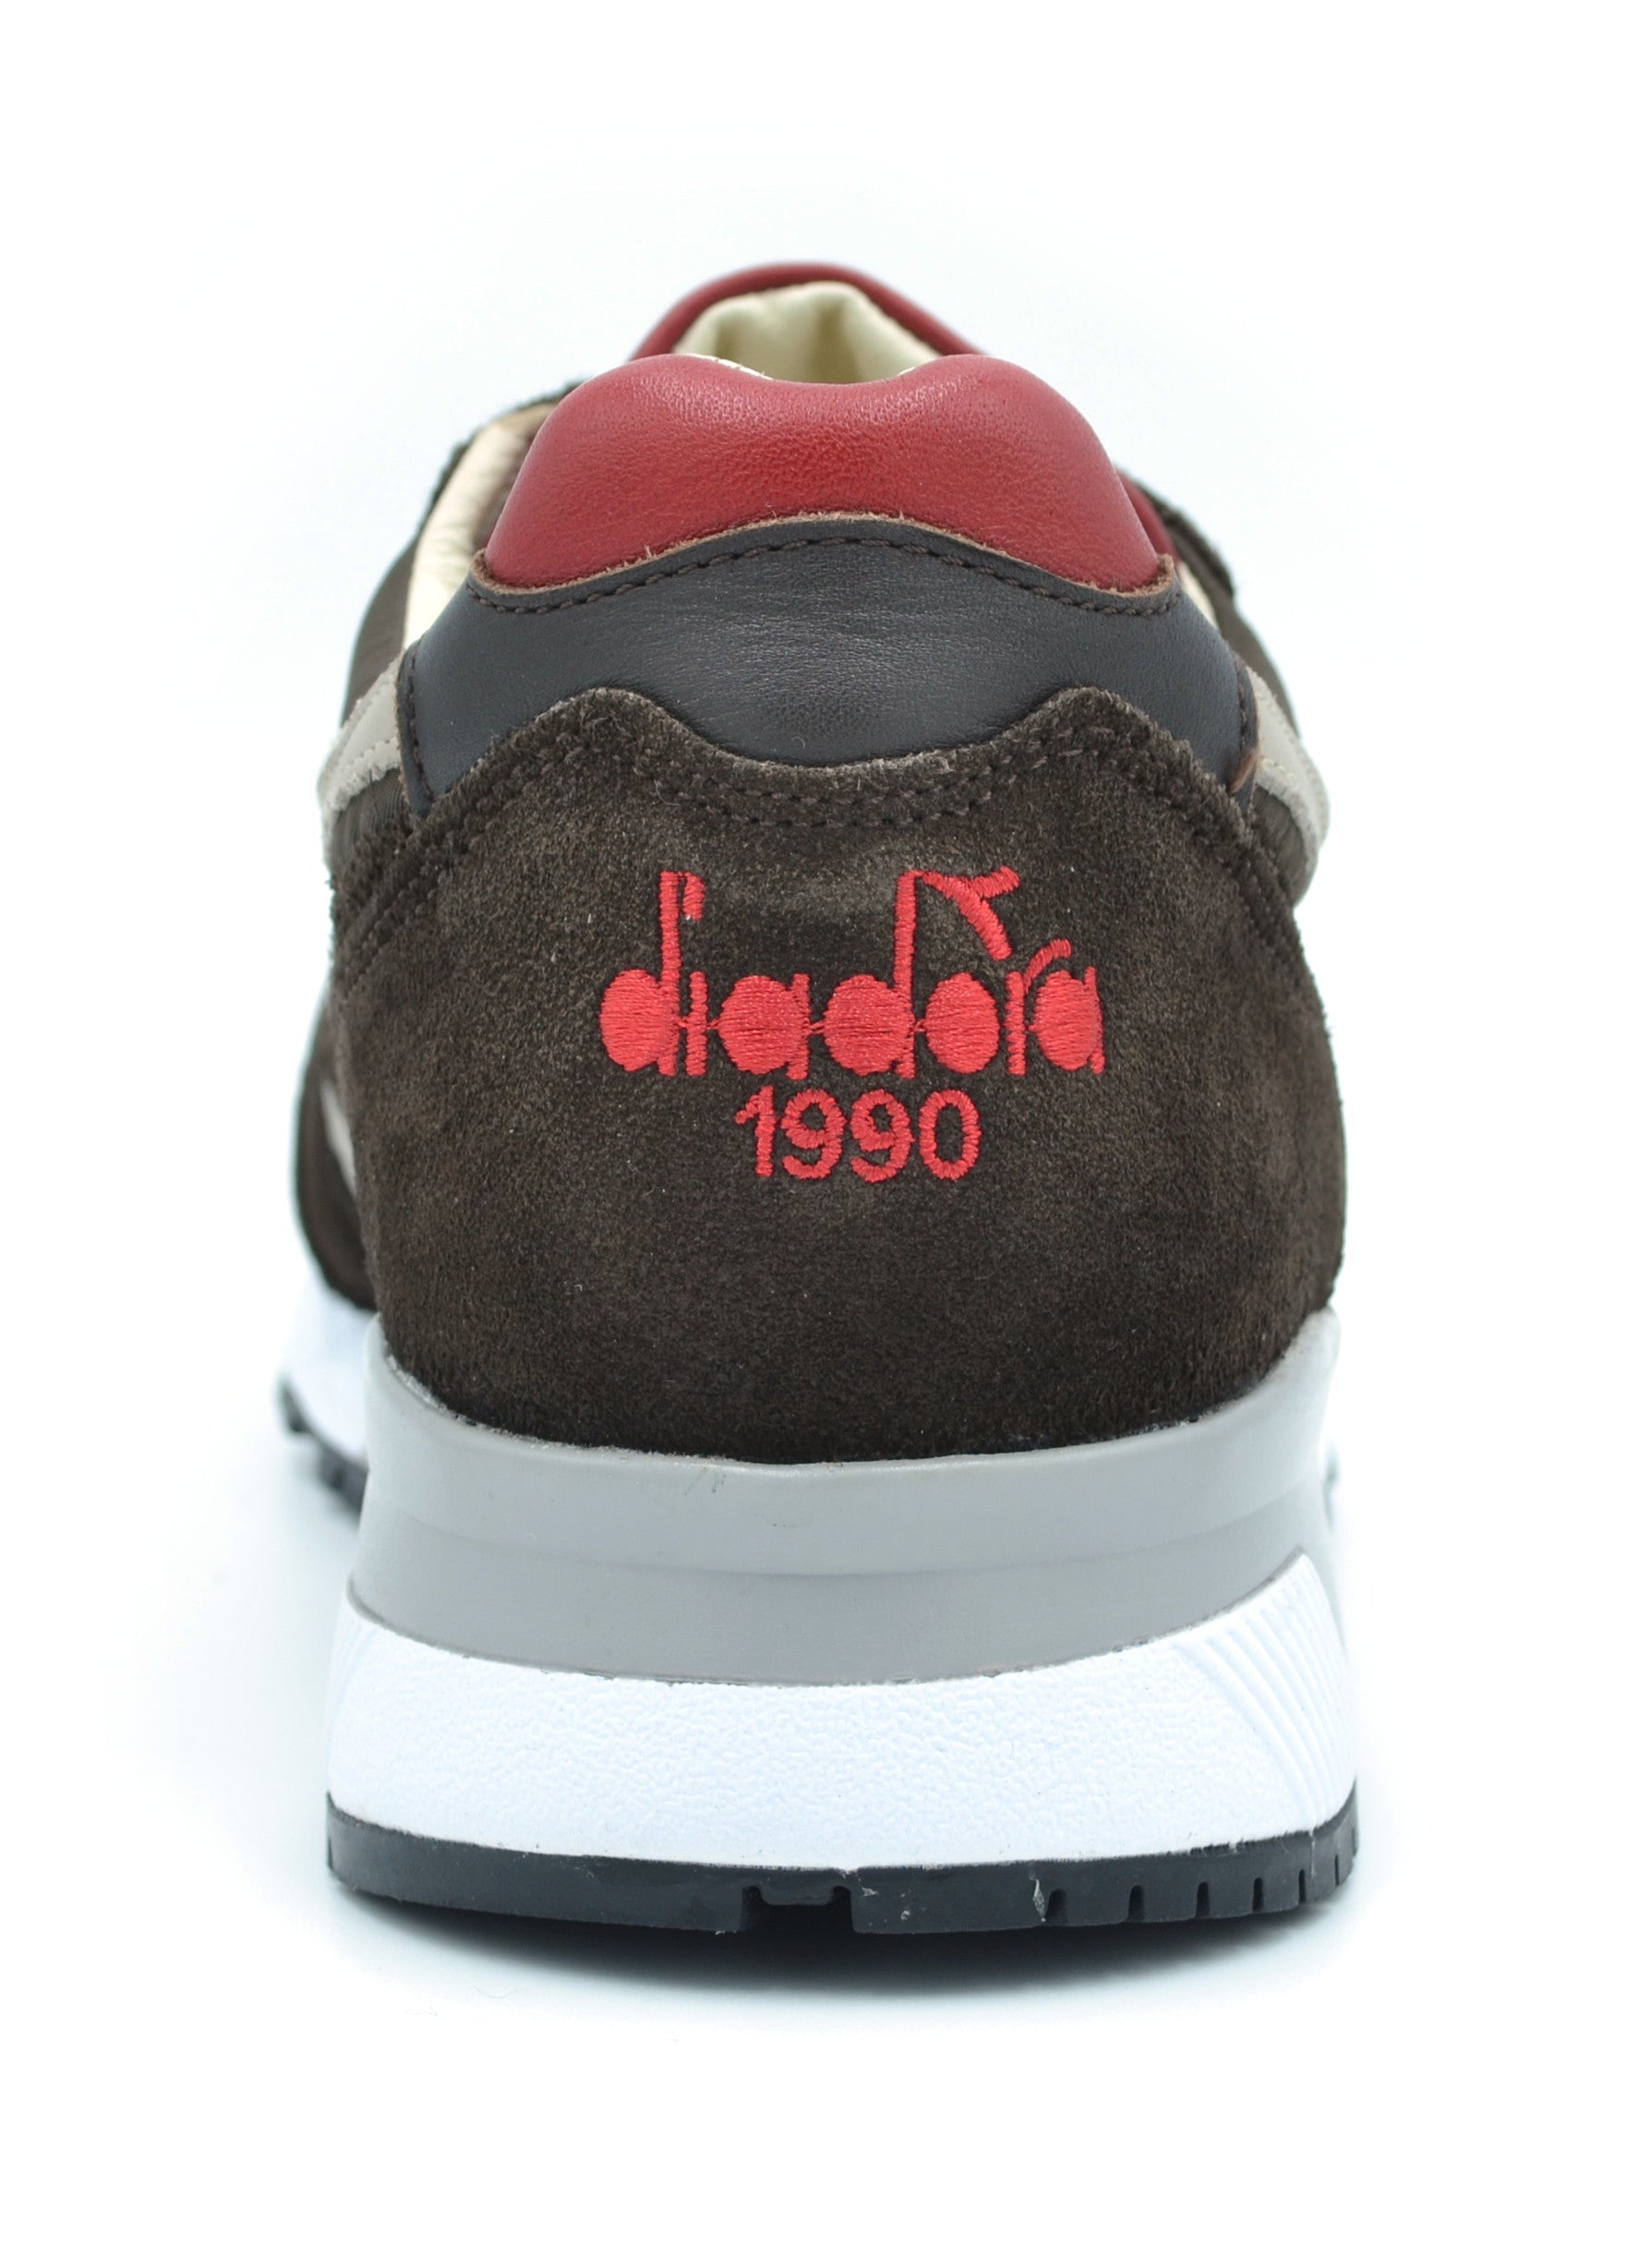 Diadora heritage sneaker h9000 h s sw